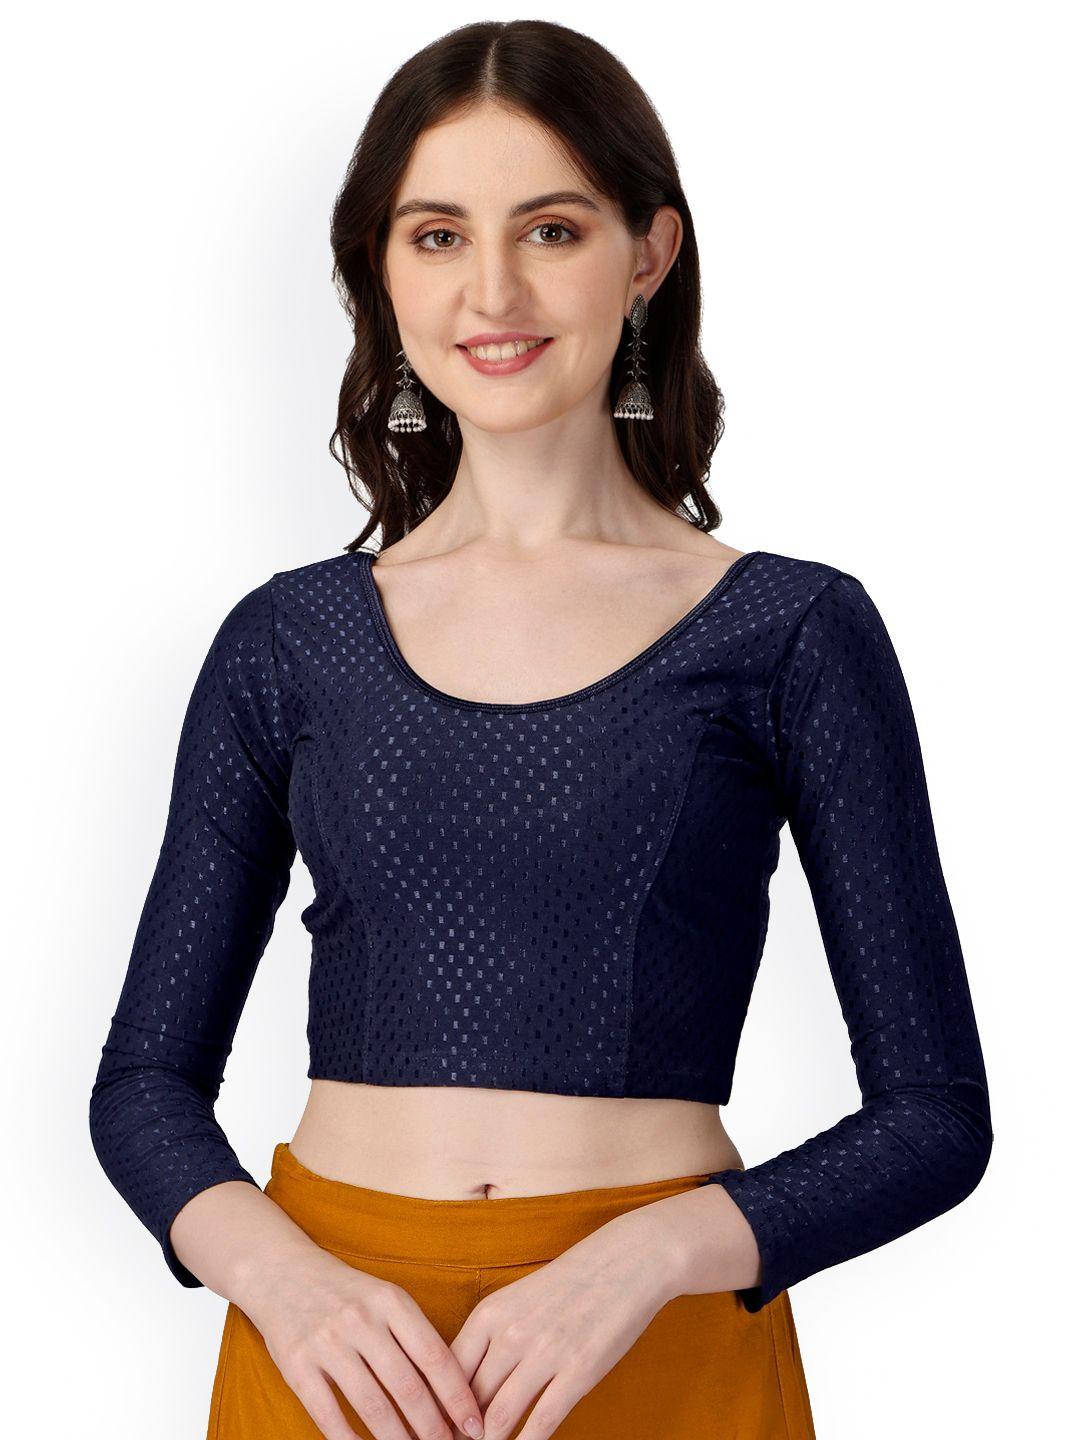 scube designs woven design saree blouse